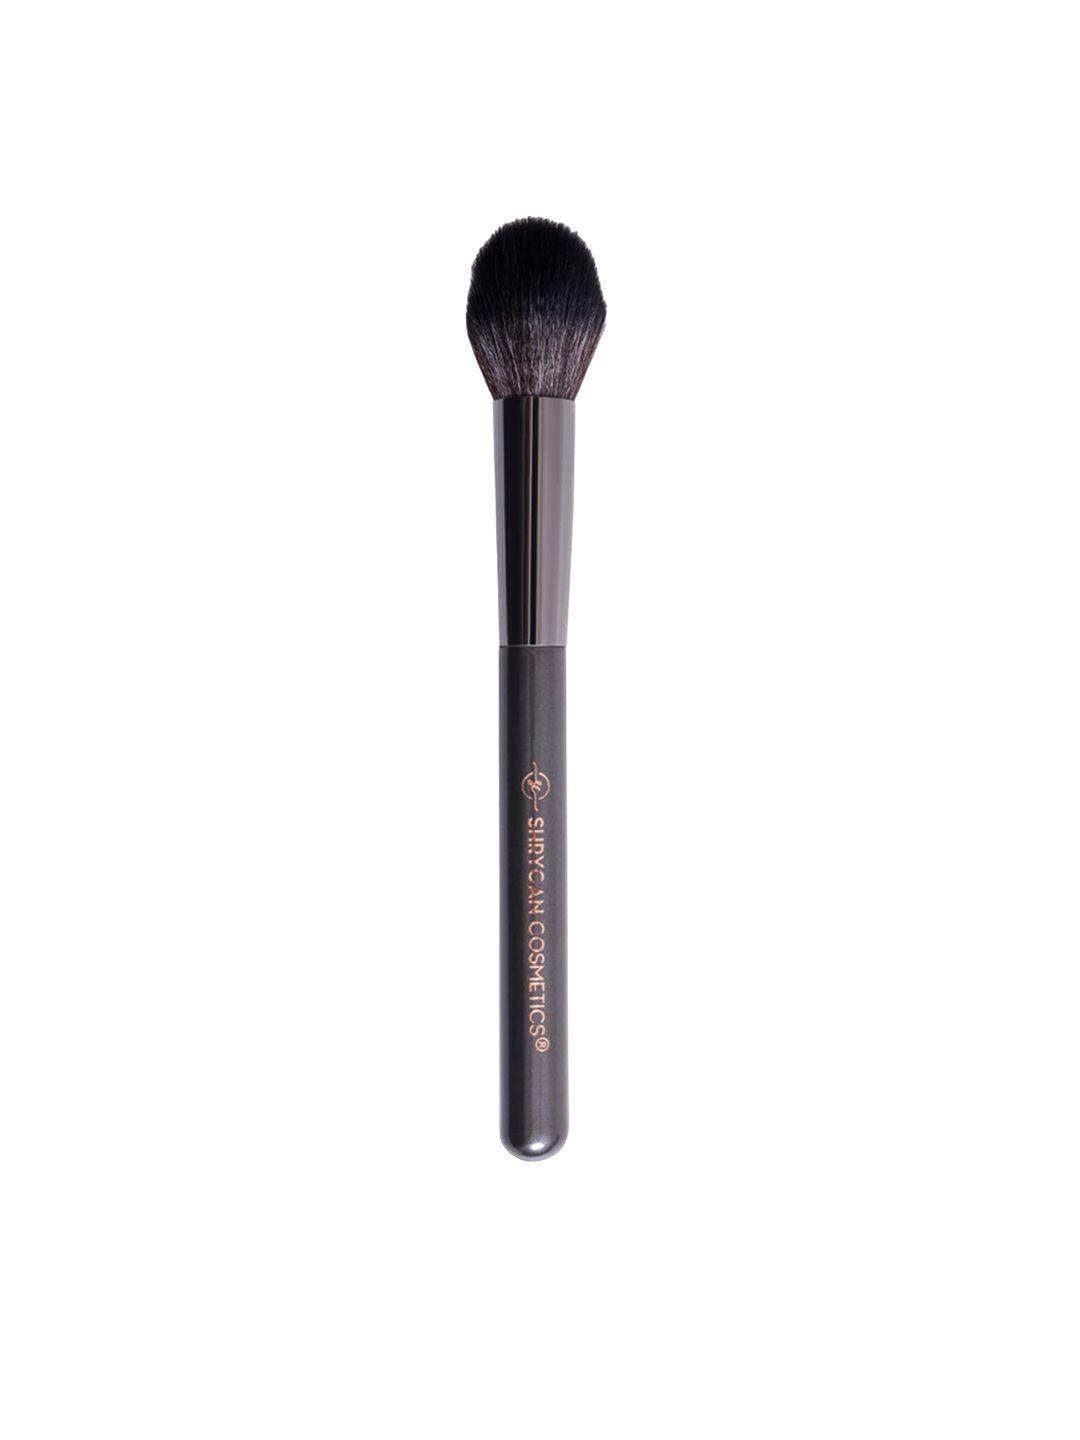 shryoan professional makeup powder brush - 02